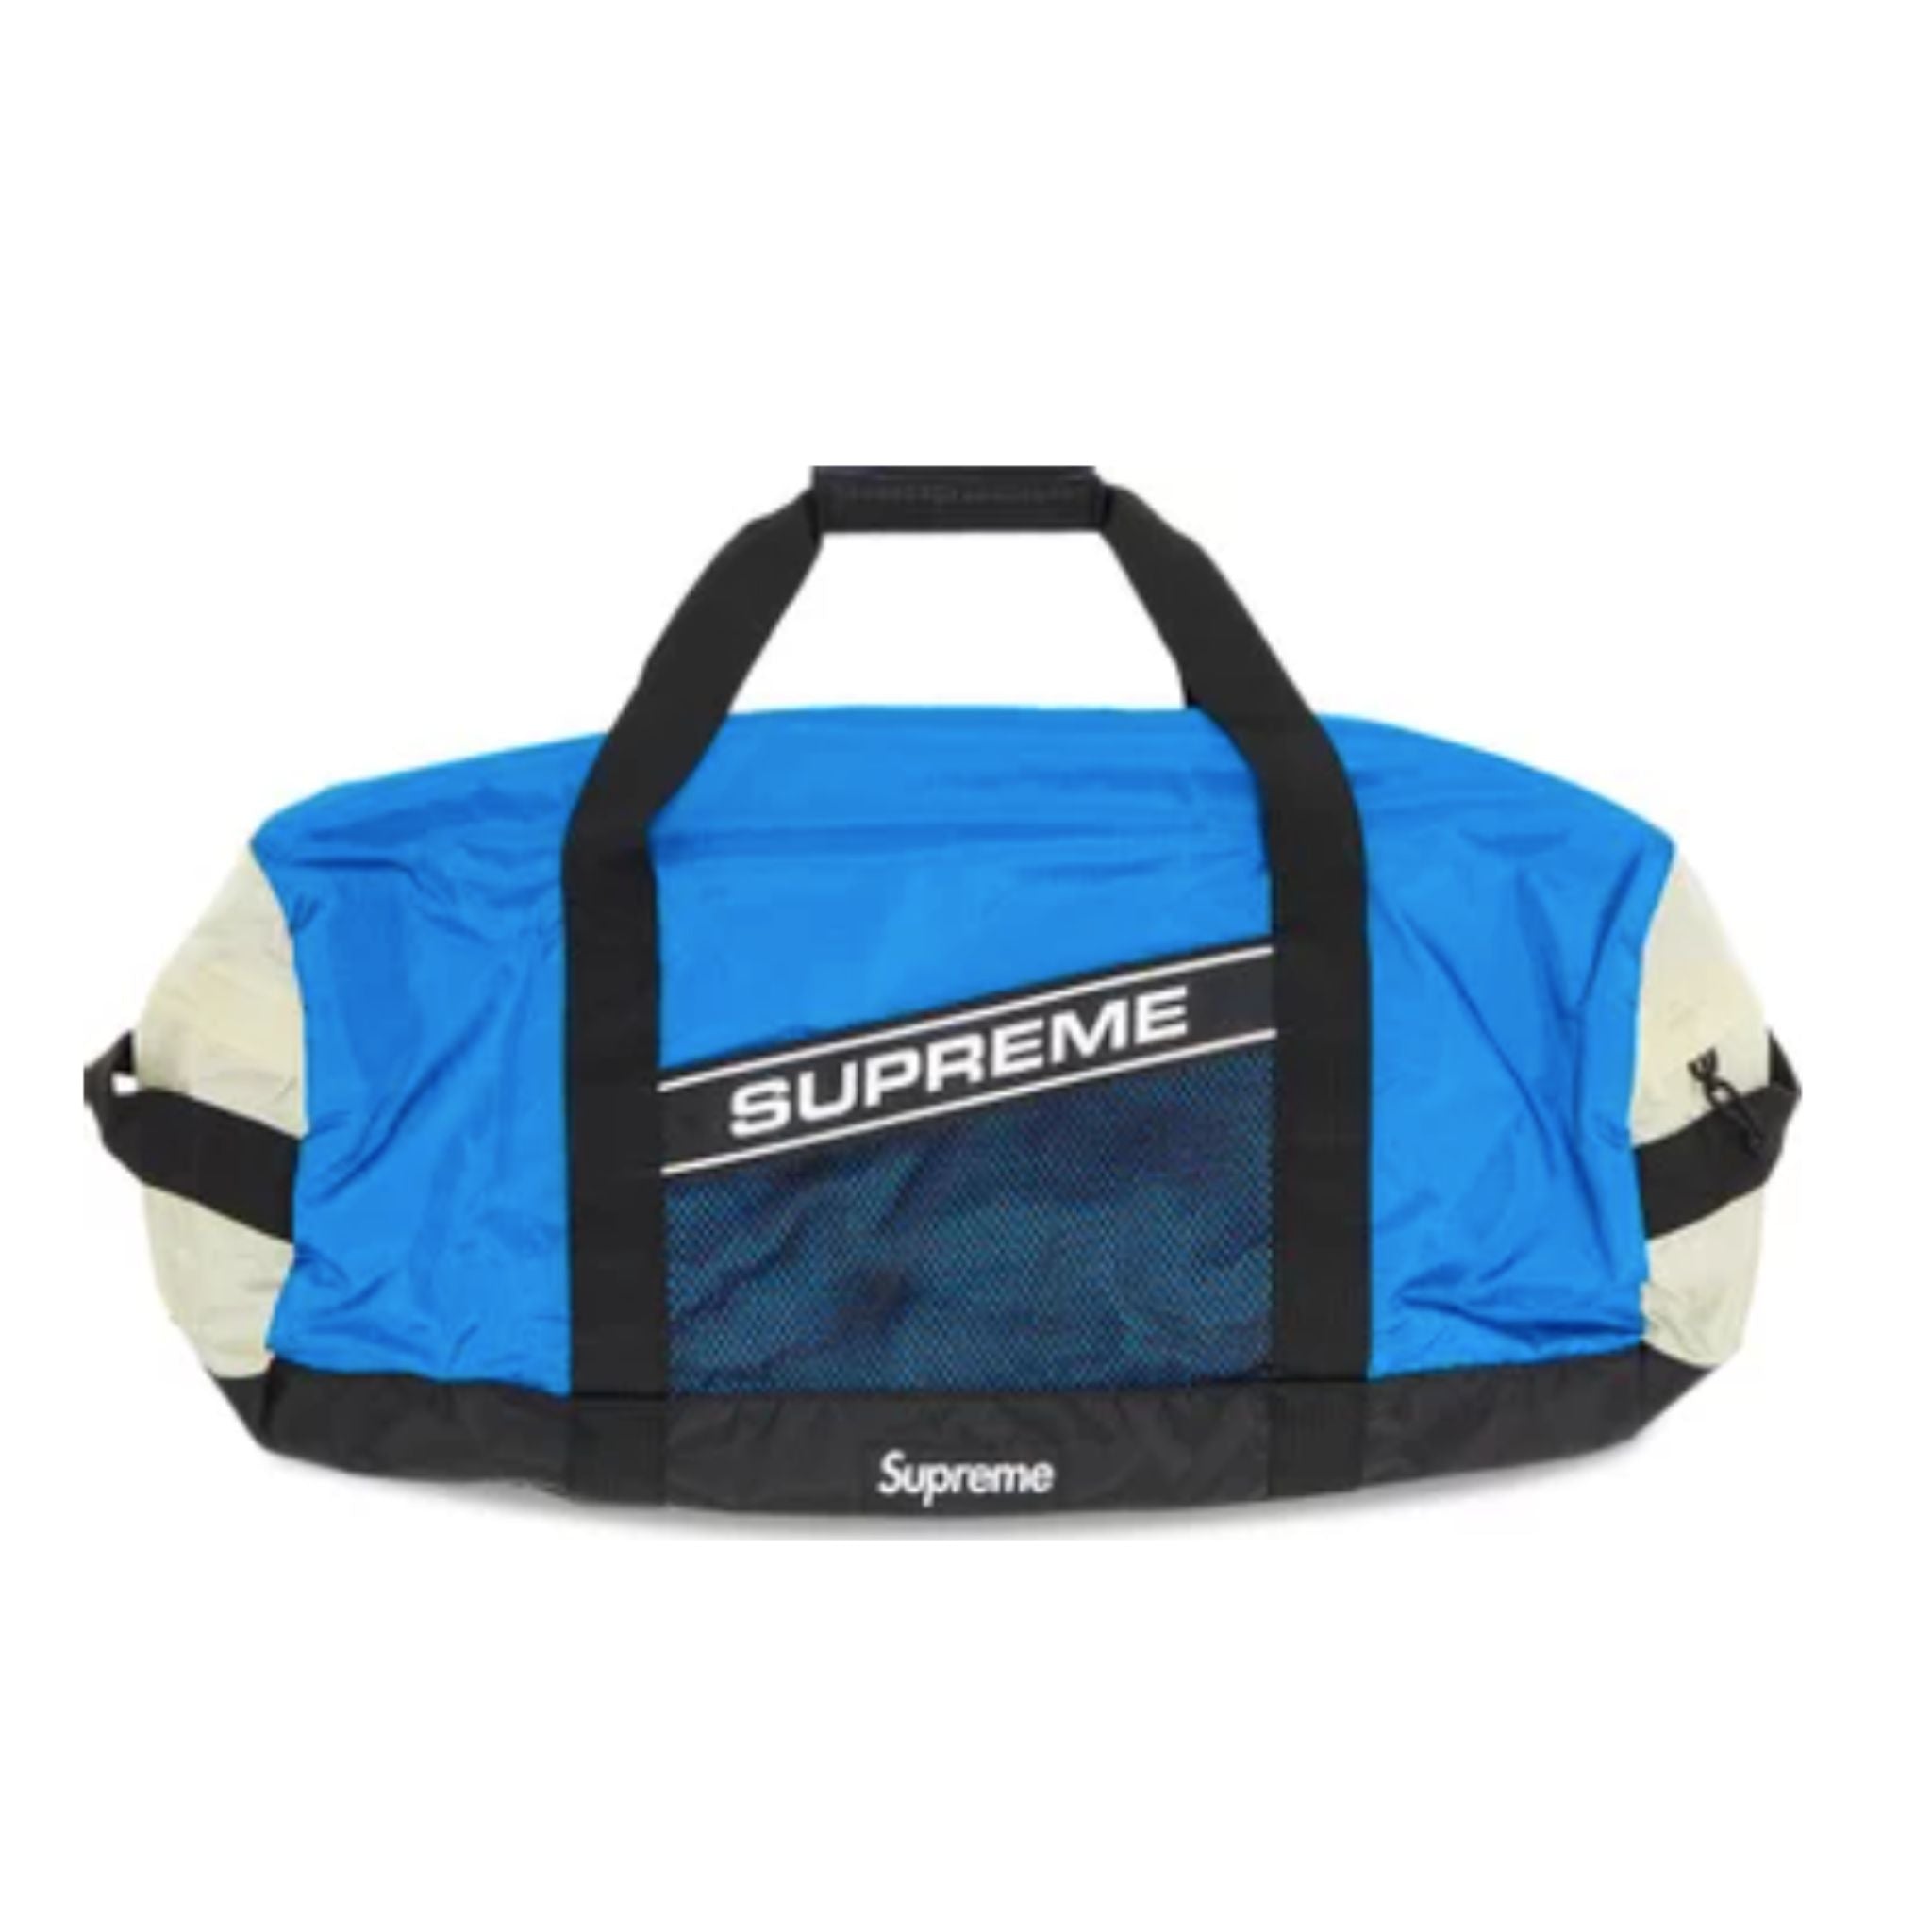 supreme duffle bag black